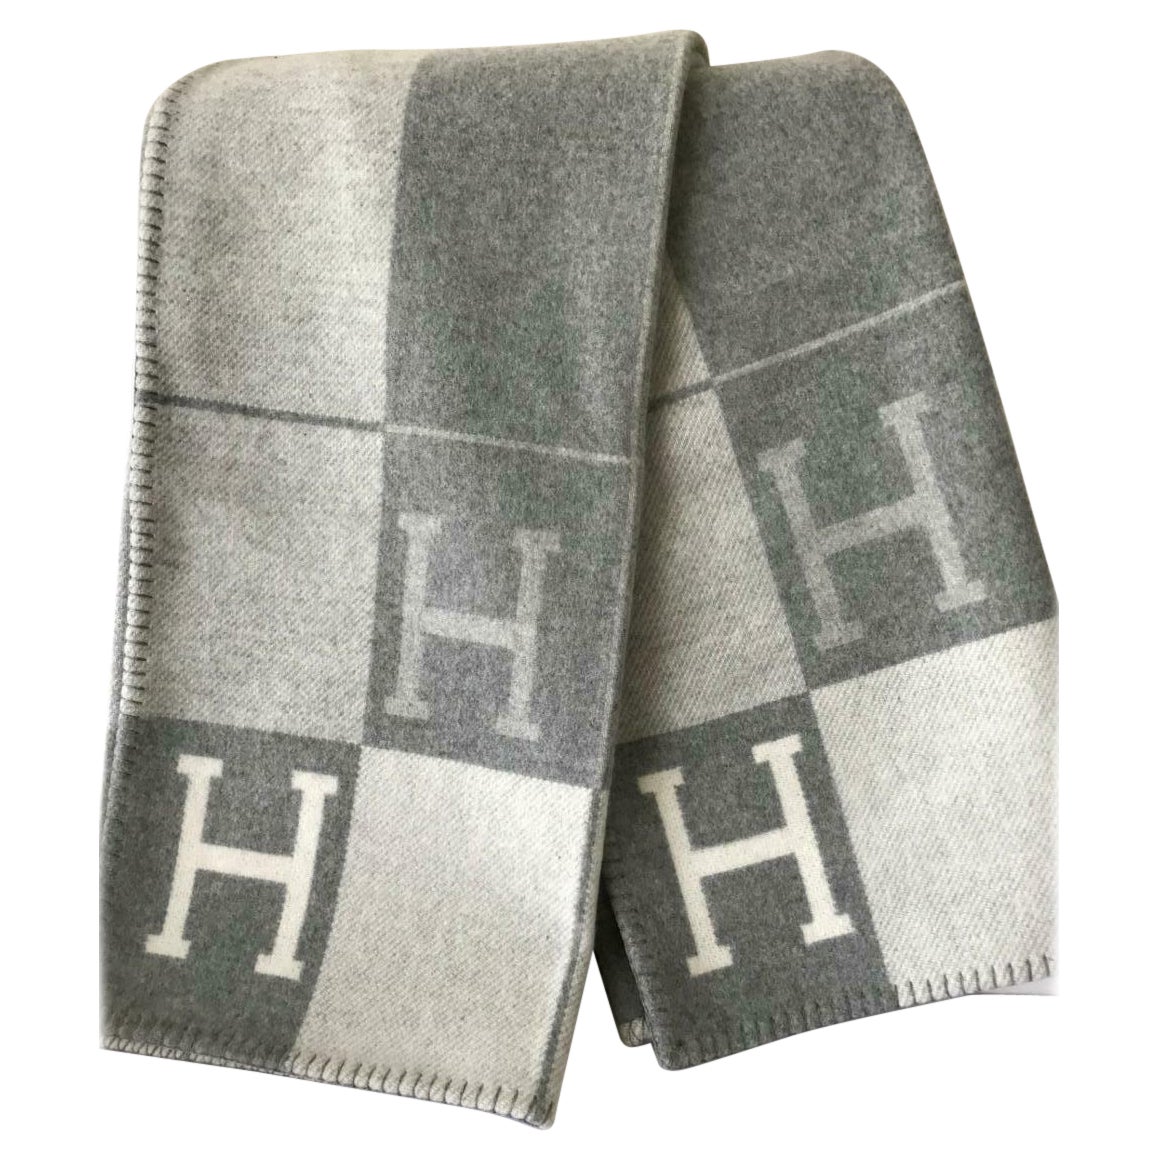 Hermes Blanket Avalon III Throw Ecru Gris Clair Grey Wool Cashmere